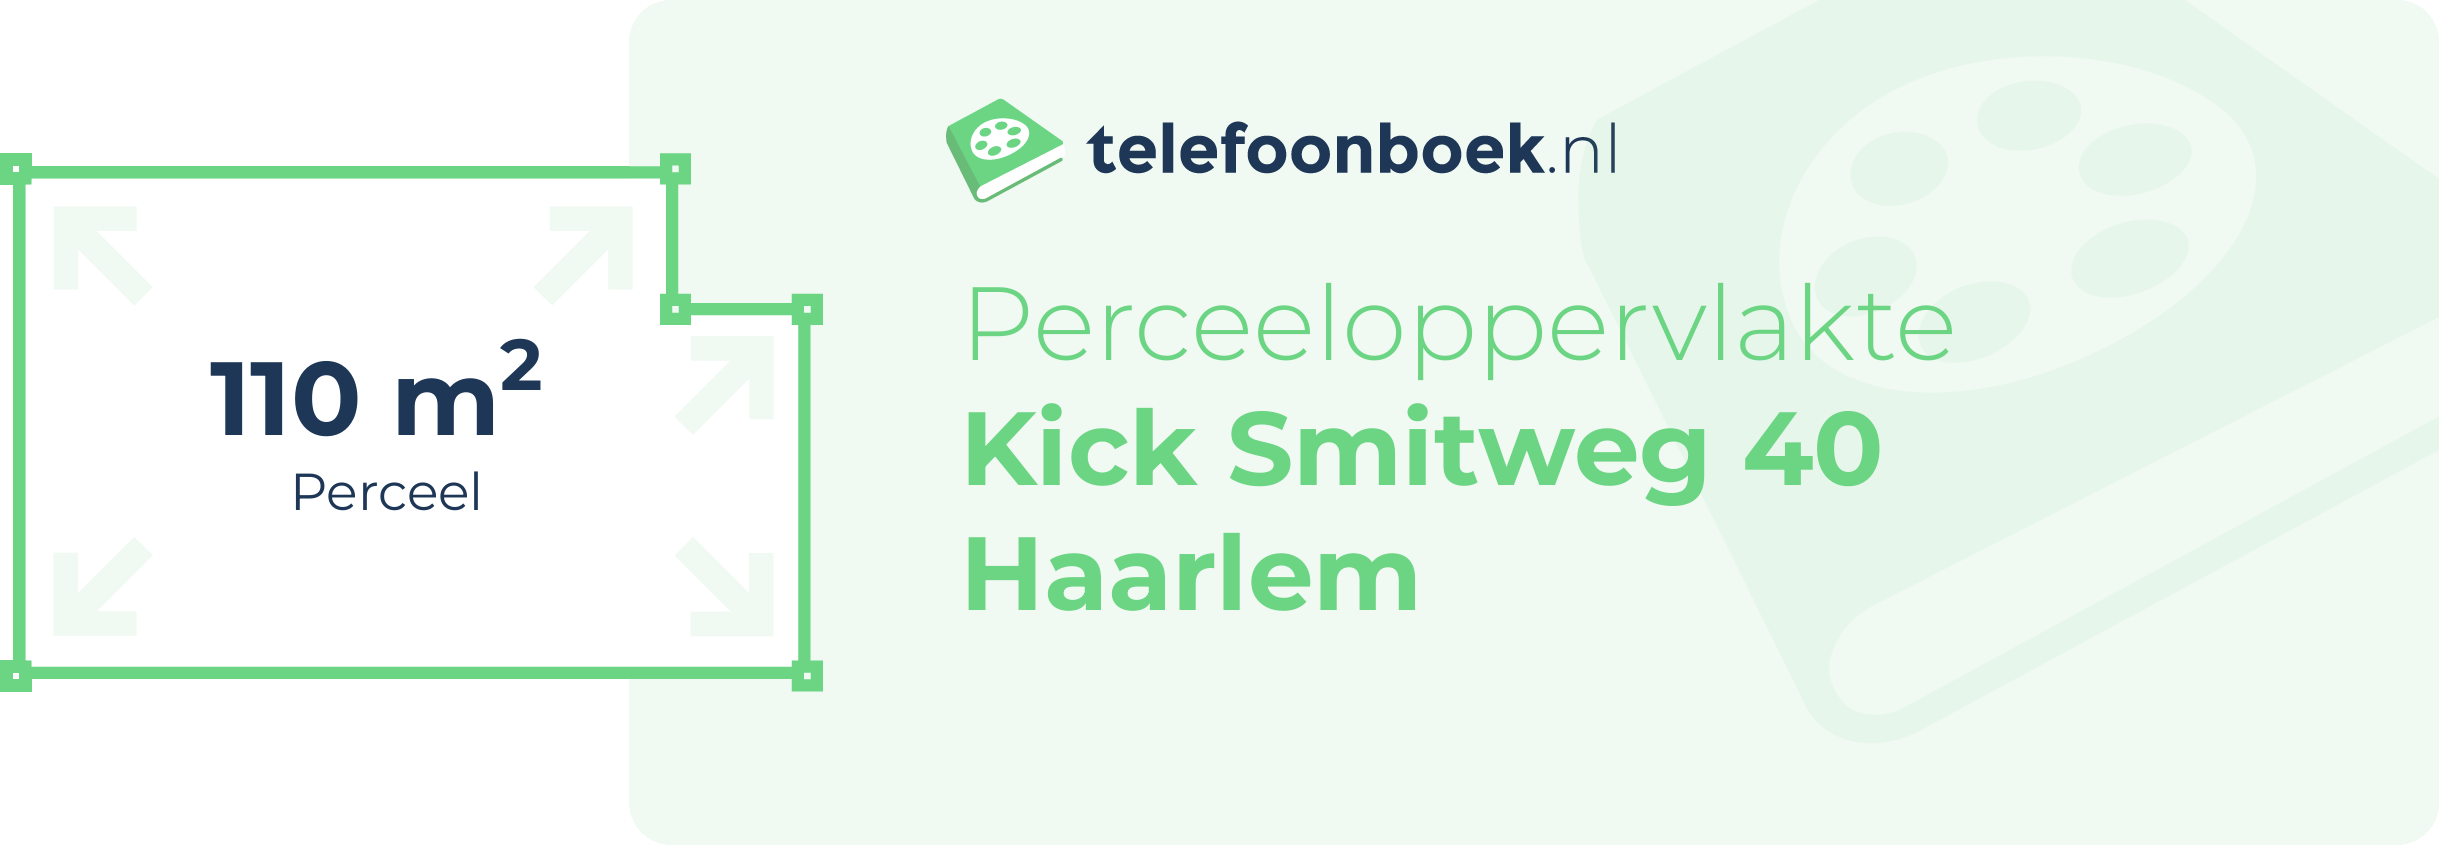 Perceeloppervlakte Kick Smitweg 40 Haarlem